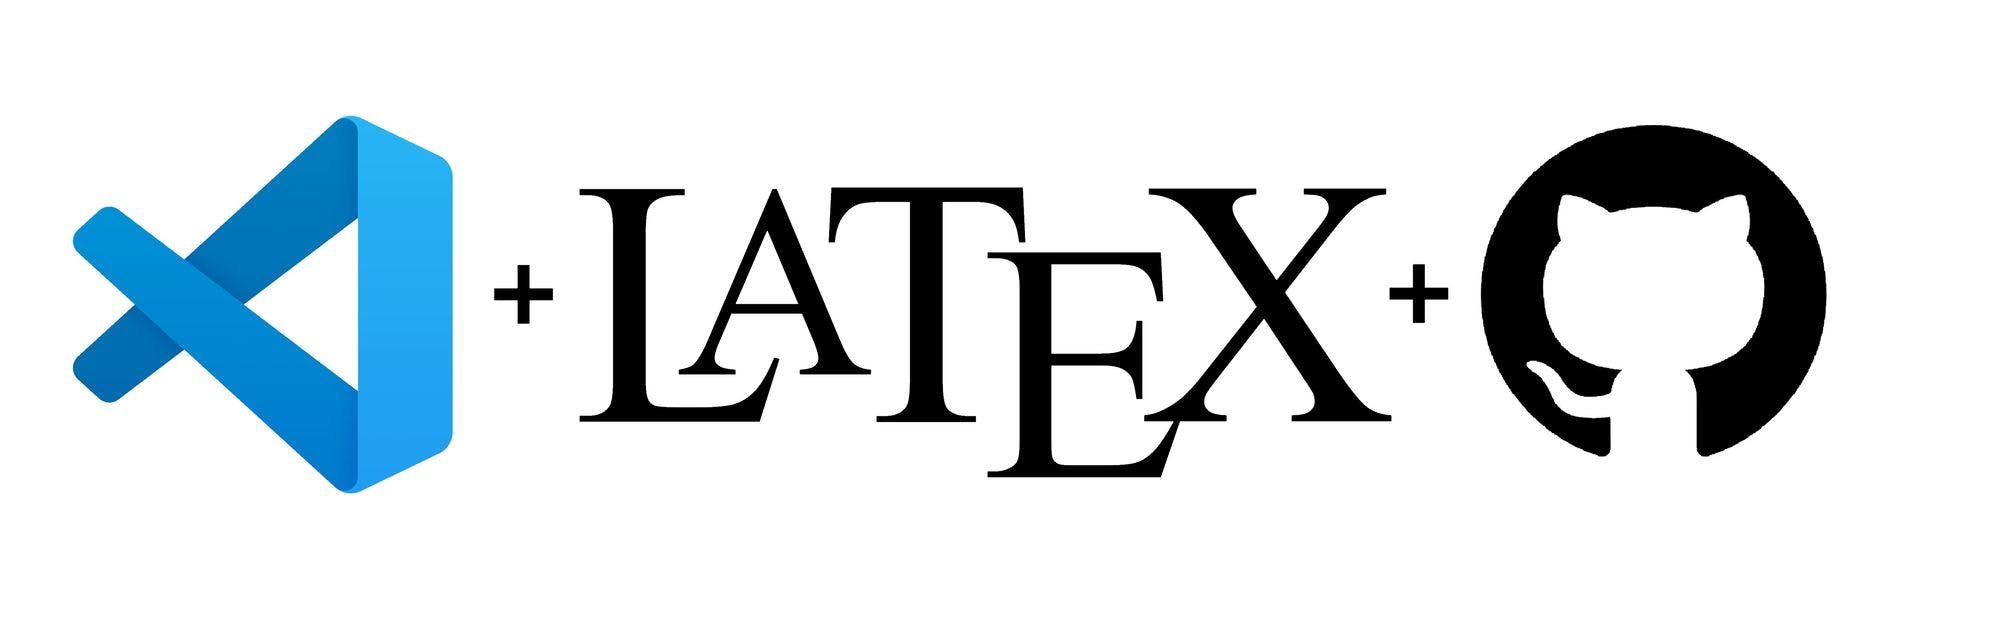 The WebLaTex